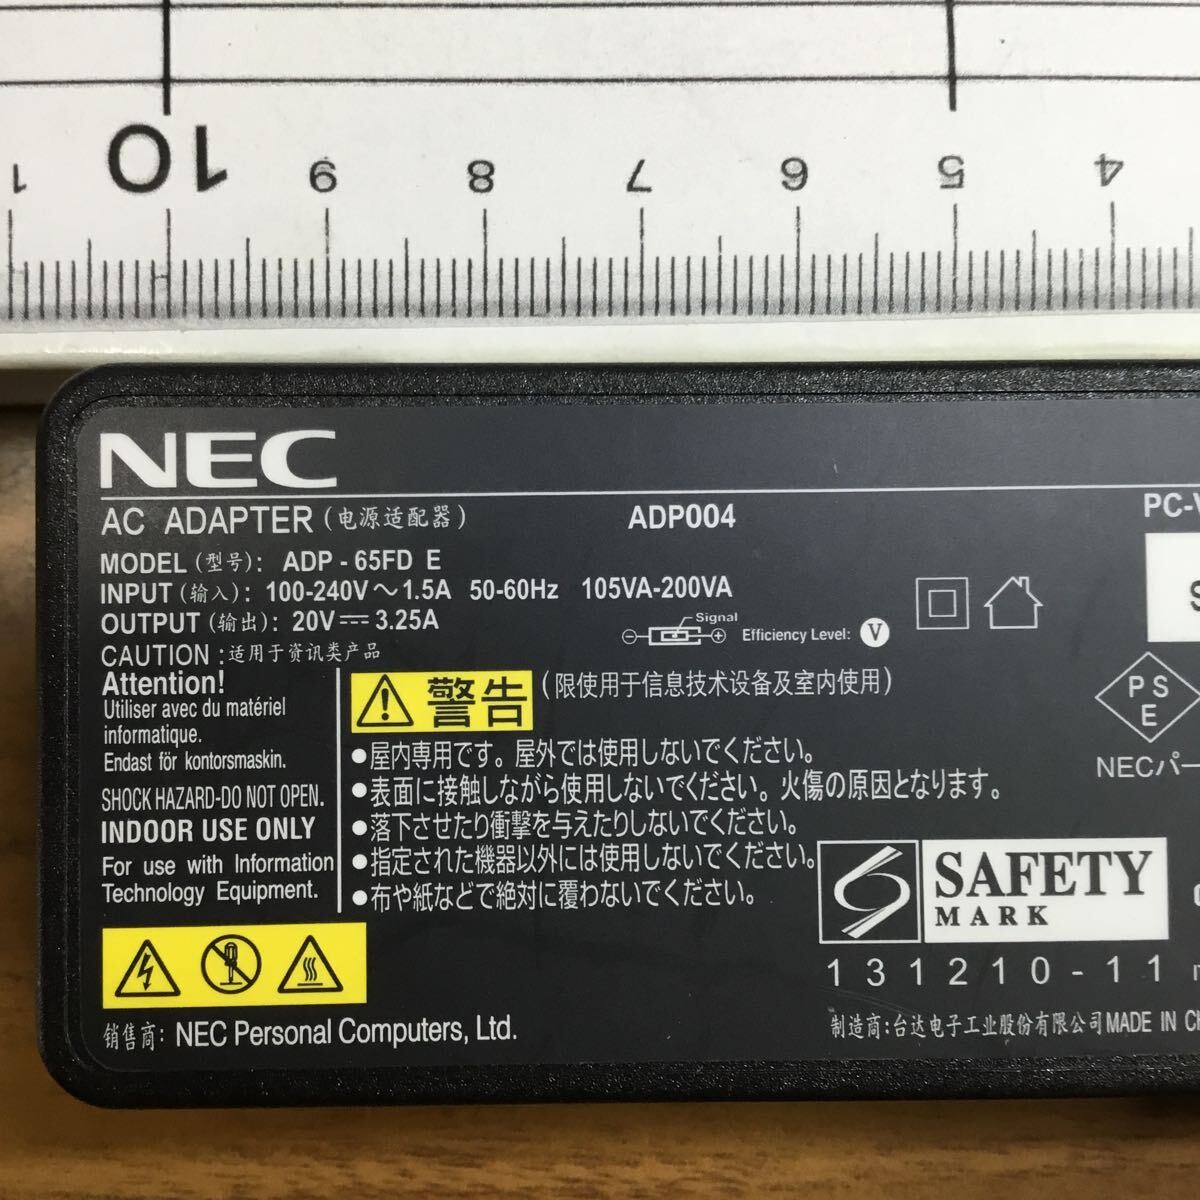 (0502HR07) free shipping / used /NEC/ADP004/20V/3.25A/ original AC adapter 4 piece set 